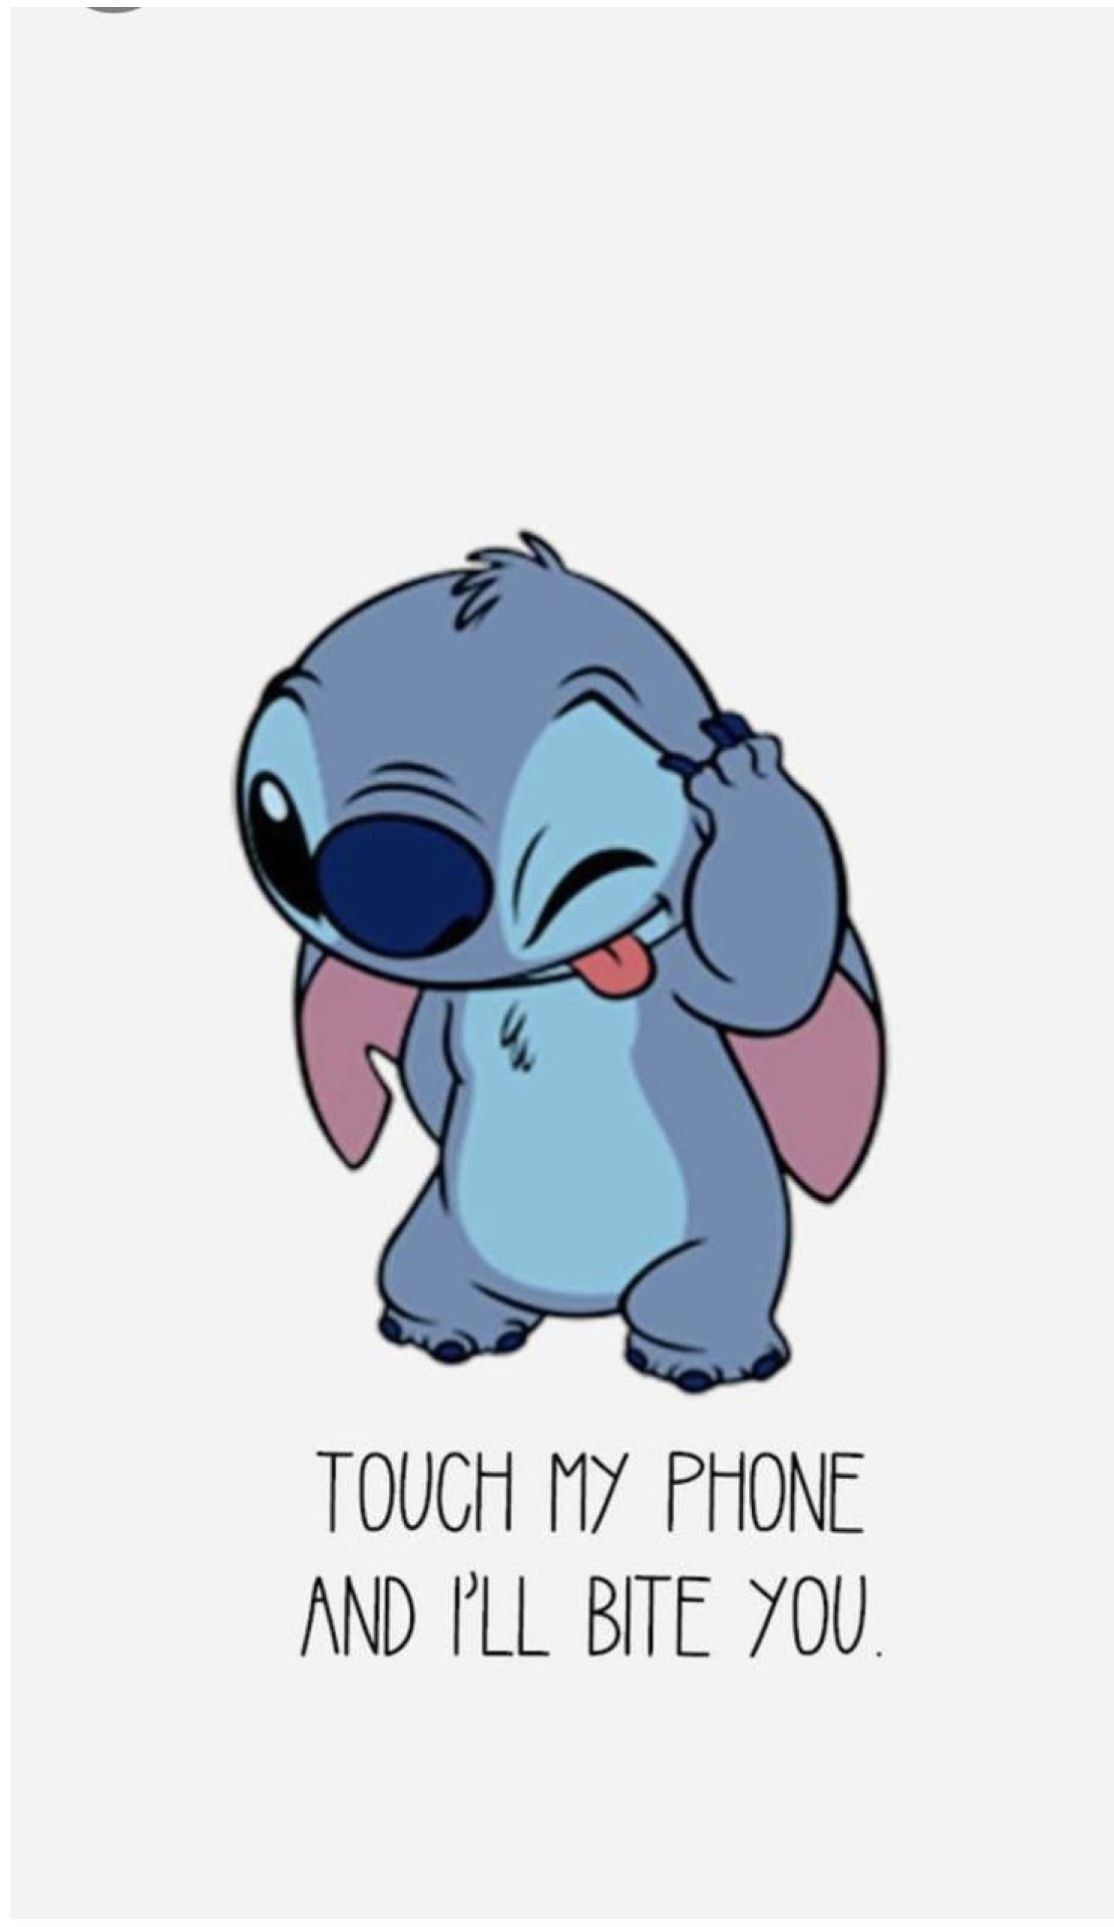 Stitch touch my phone and i'll bite you - Stitch